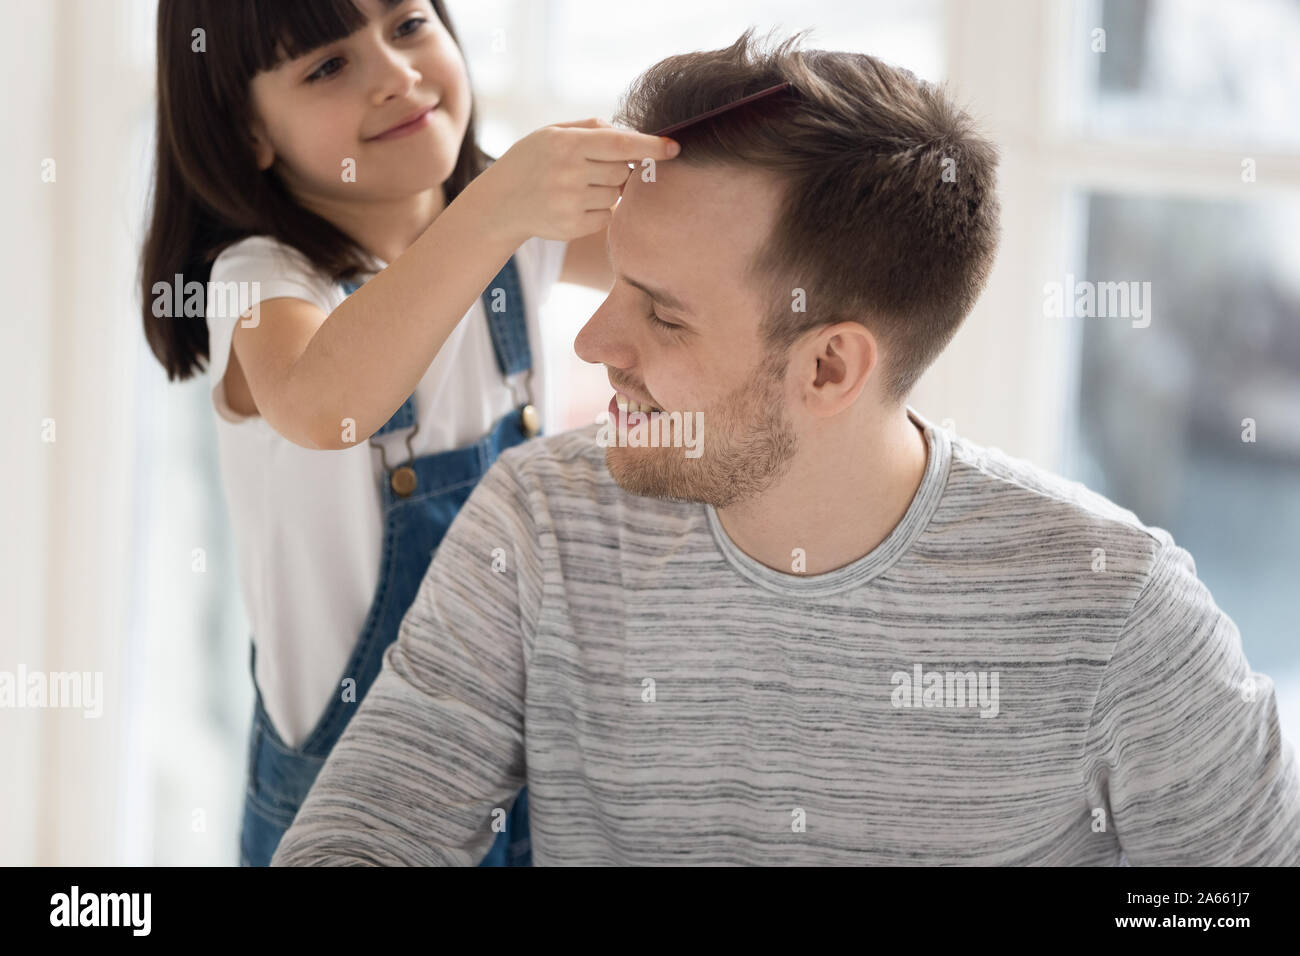 Little preschool cute daughter combing fathers hair. Stock Photo